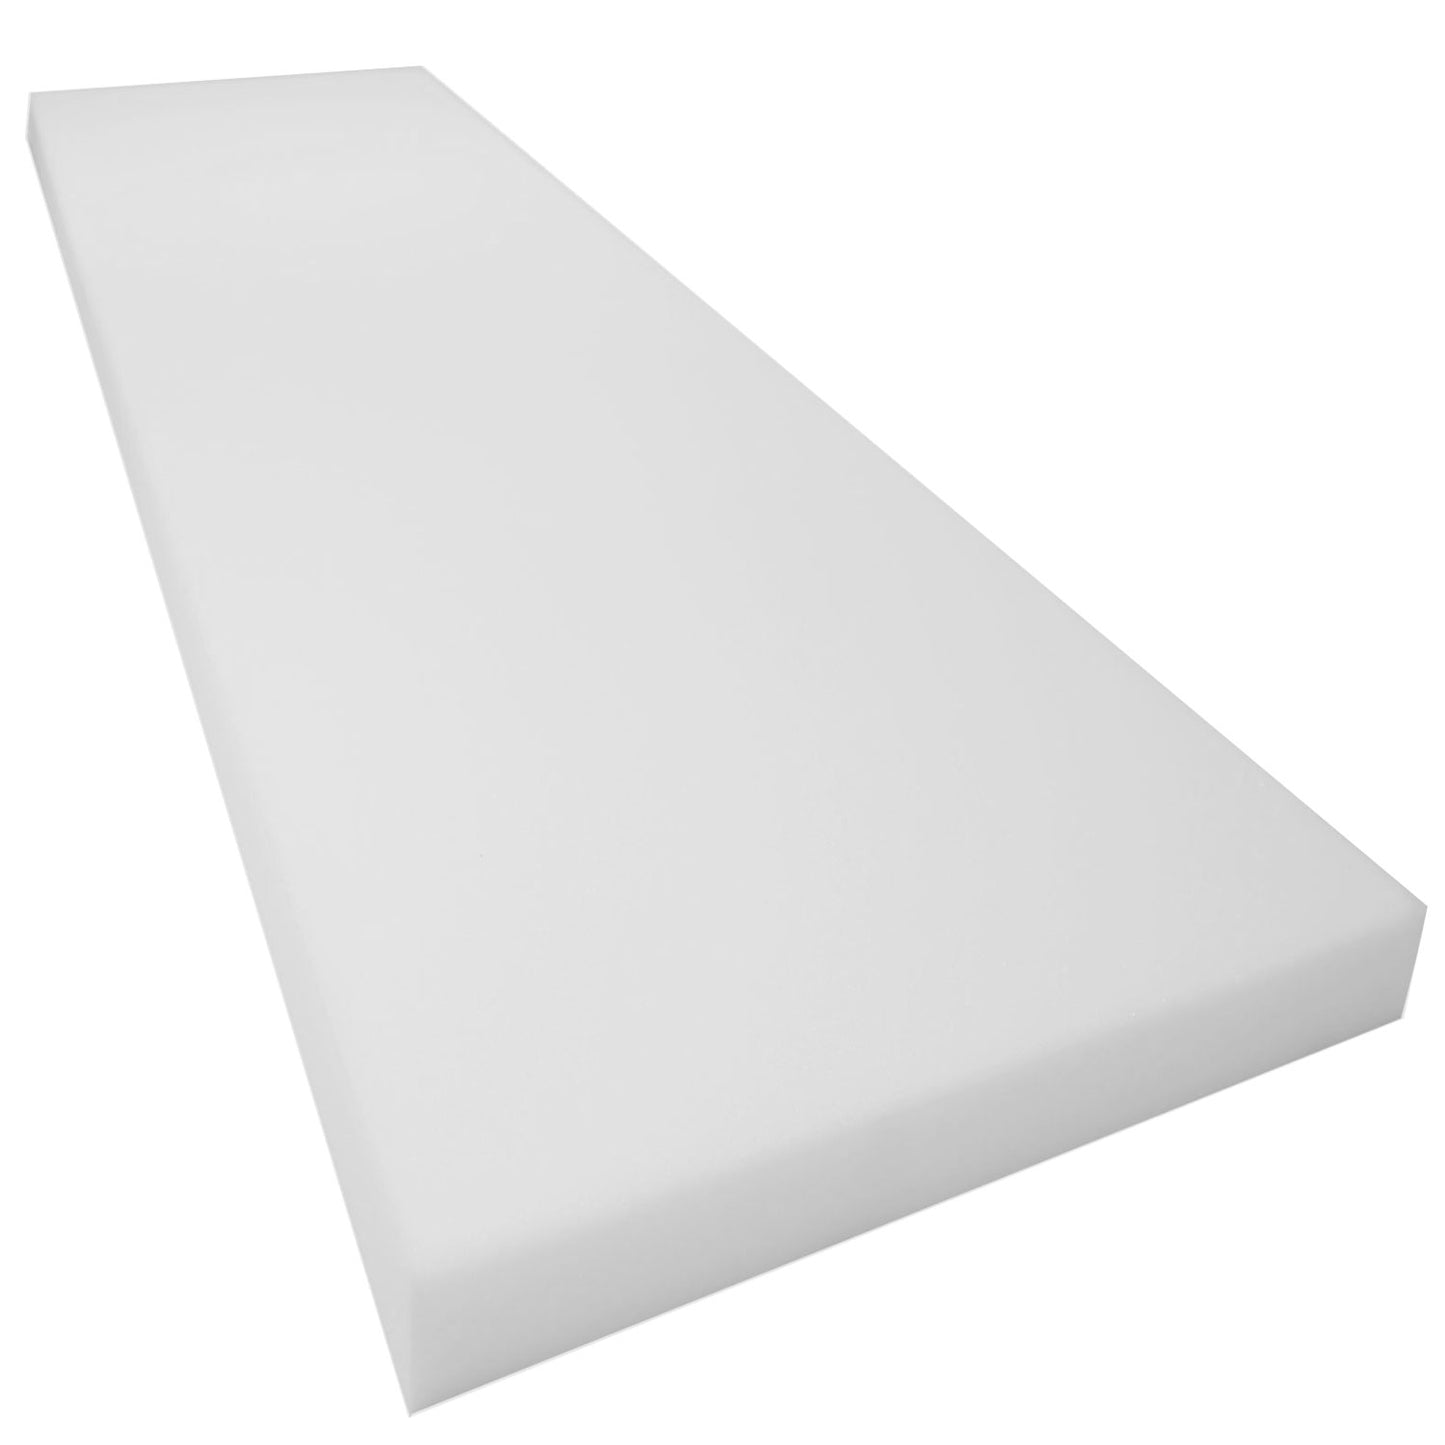 Mybecca 2" x 30" x 72" High Density Upholstery Foam Cushion (Seat Replacement, Upholstery Sheet, Foam Padding)